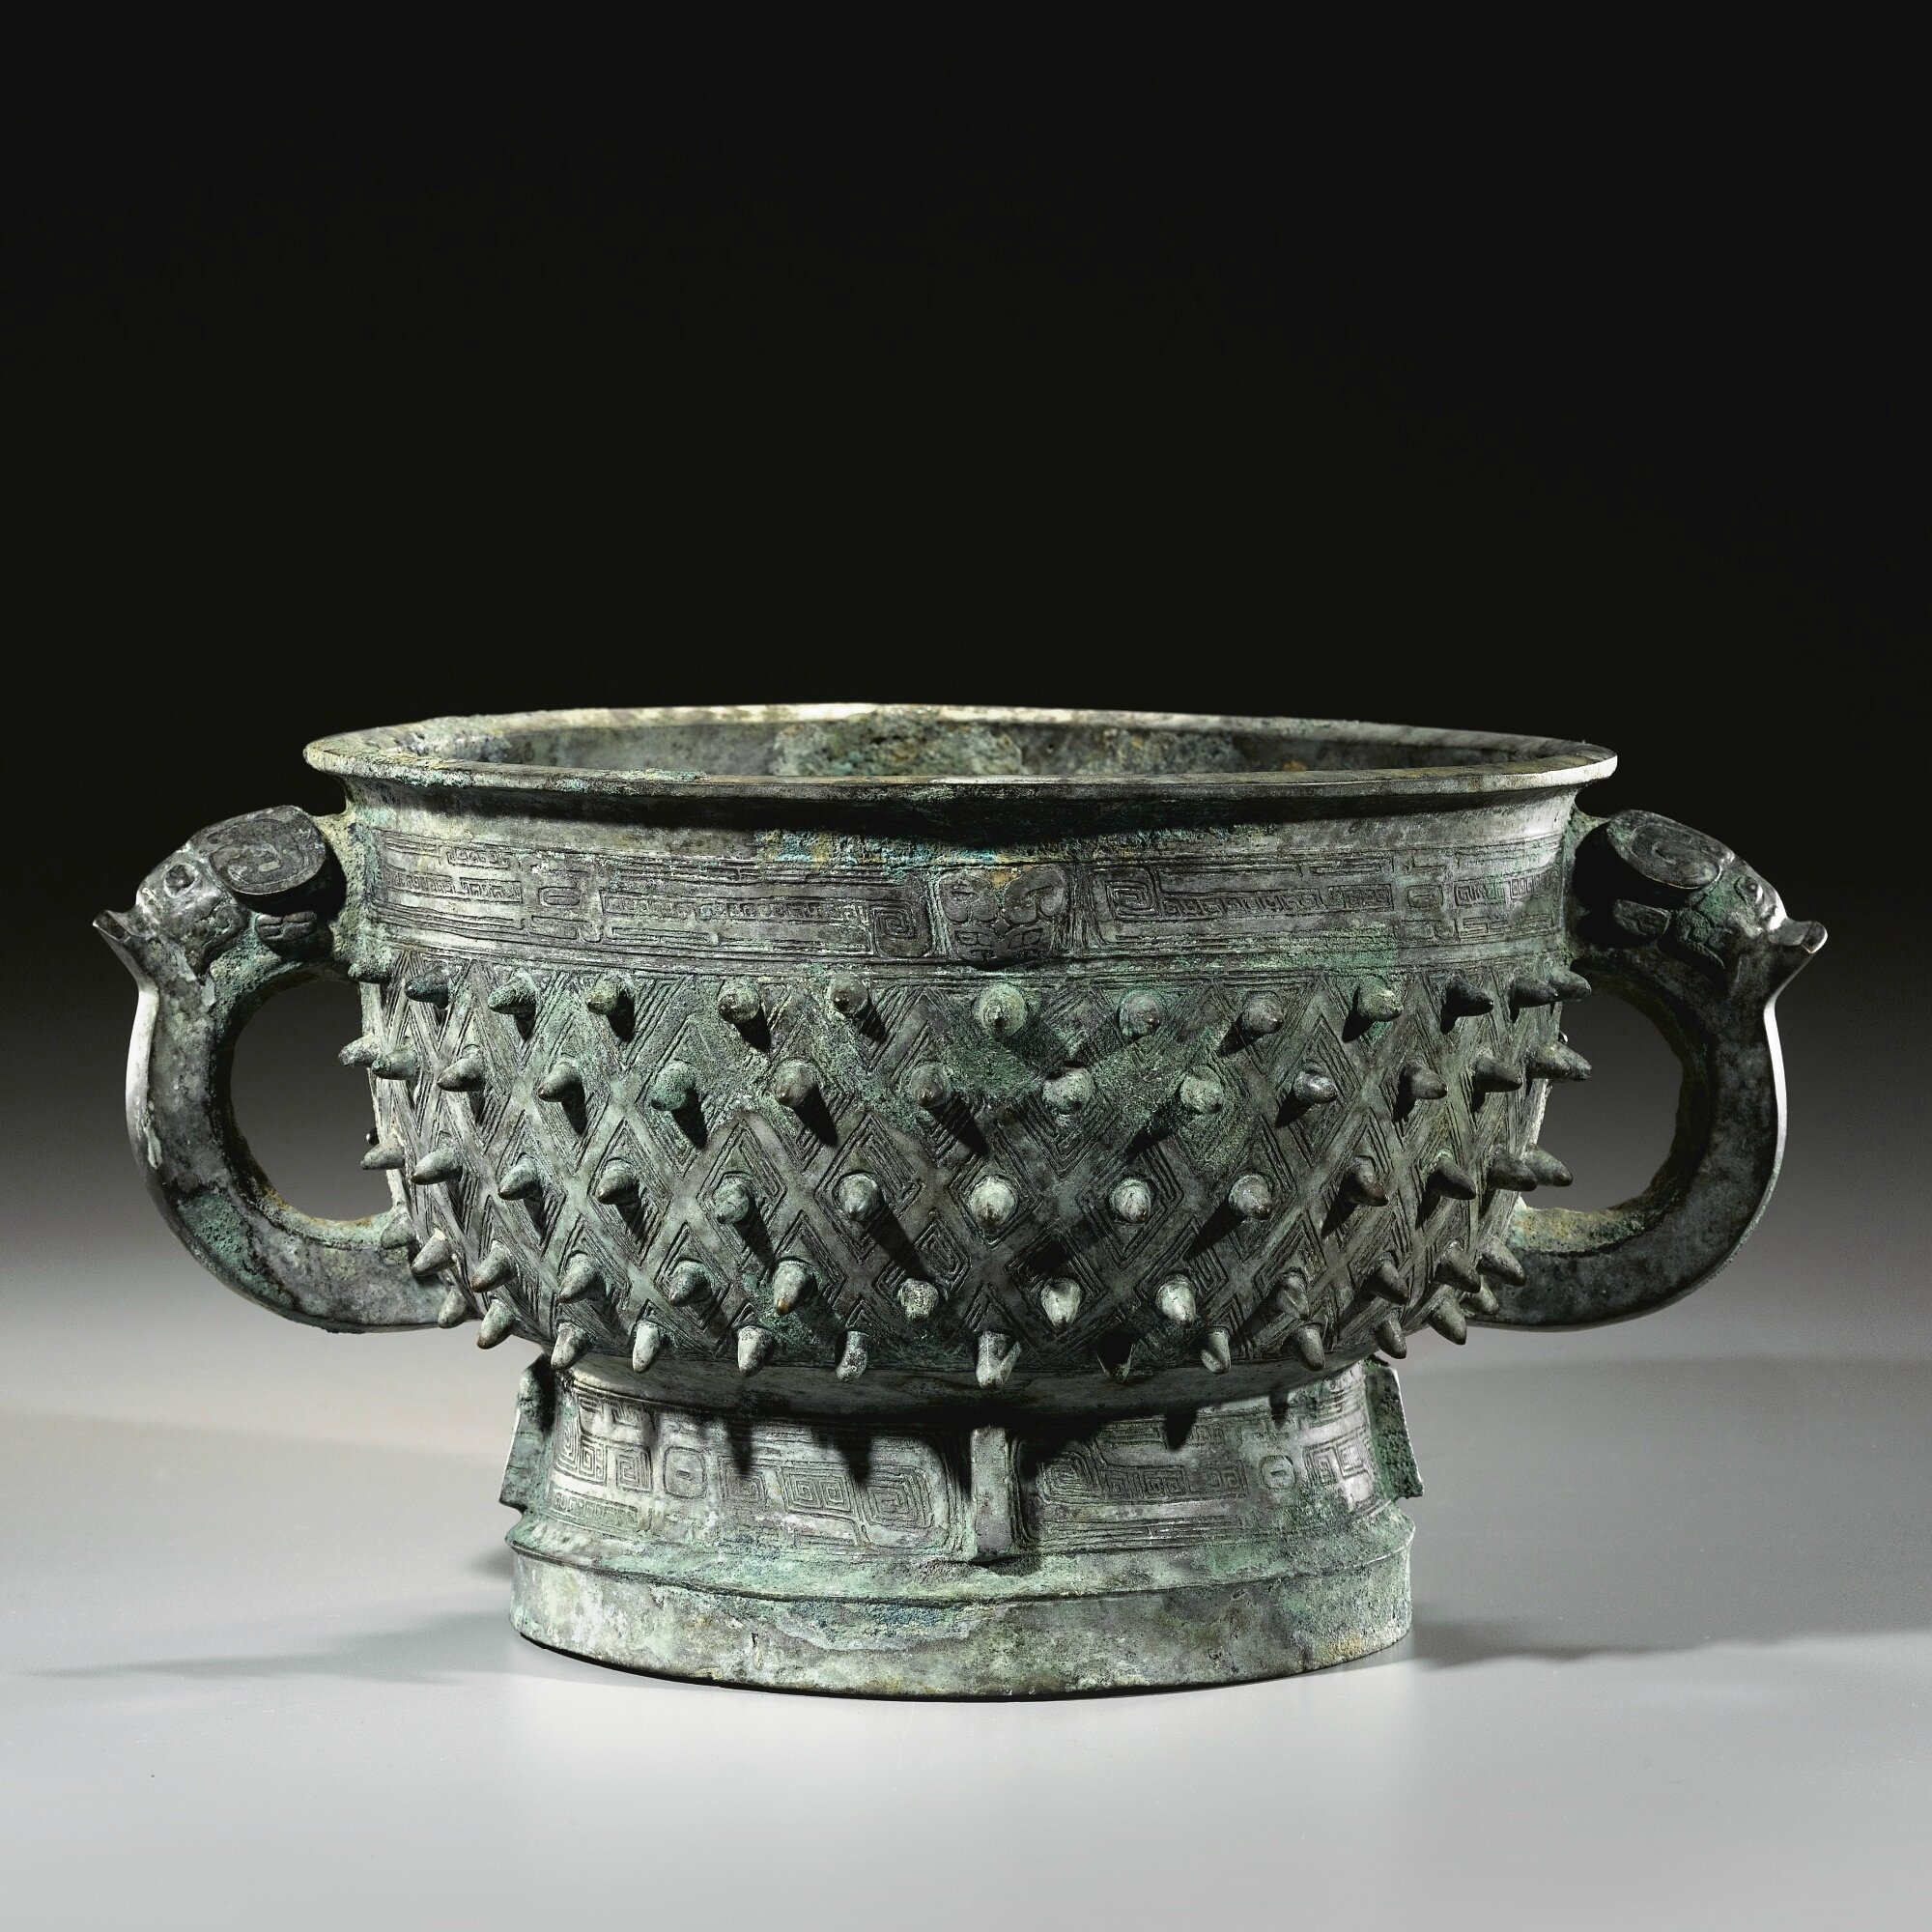 A fine archaic bronze ritual food vessel, gui, Late Shang dynasty (c